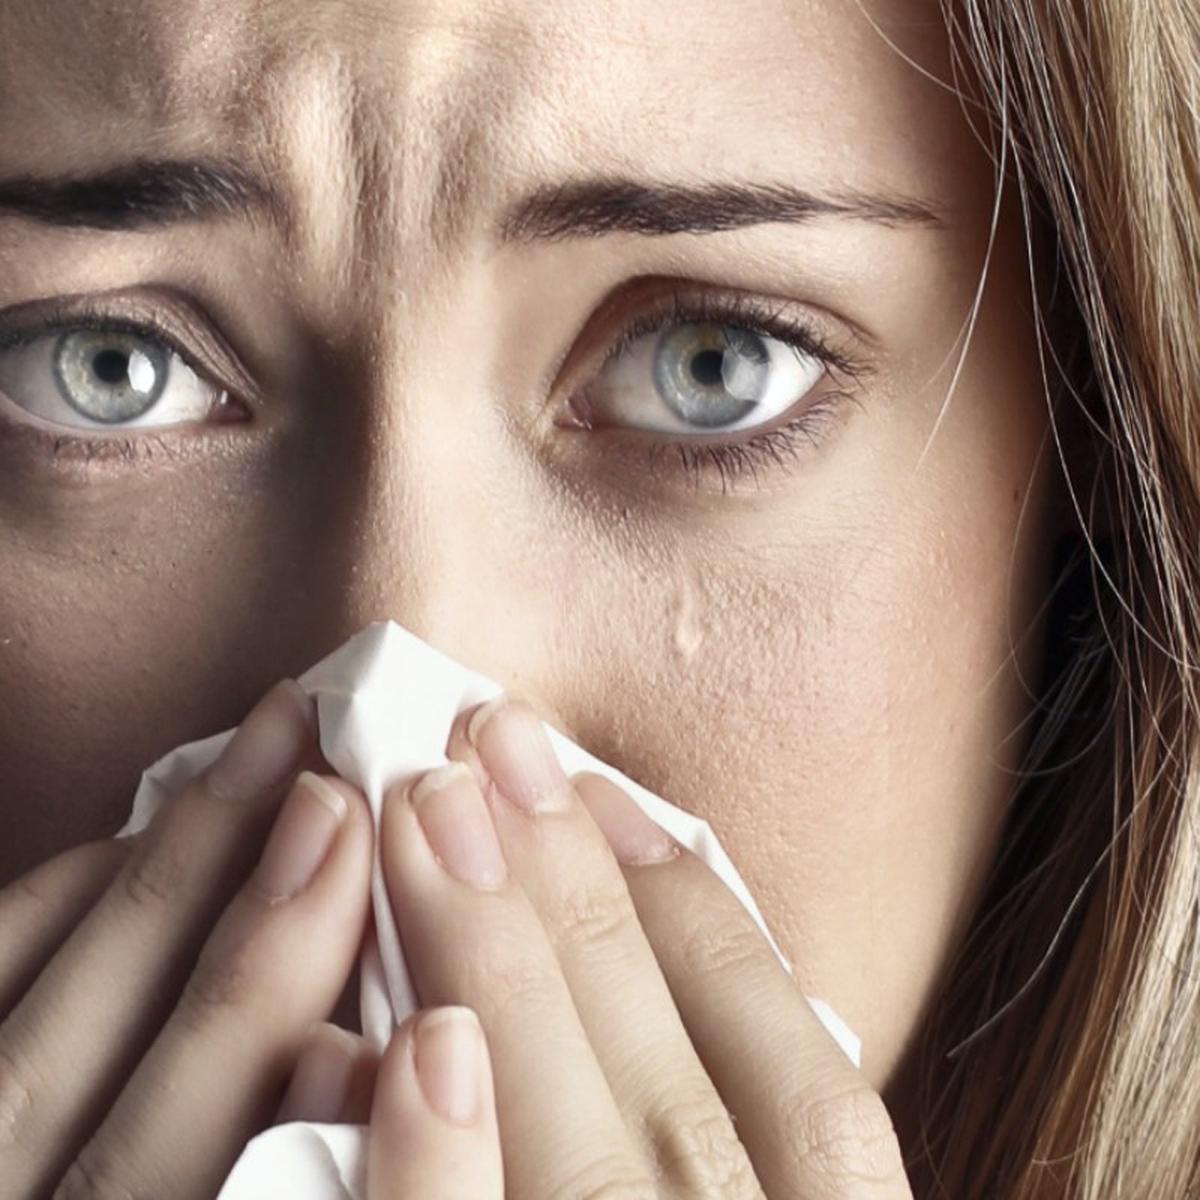 Qué remedios caseros aplicar para destapar la nariz en un minuto |  Congestión nasal | Trucos | Hacks | Hogar | nnda nnni | HOGAR | OJO